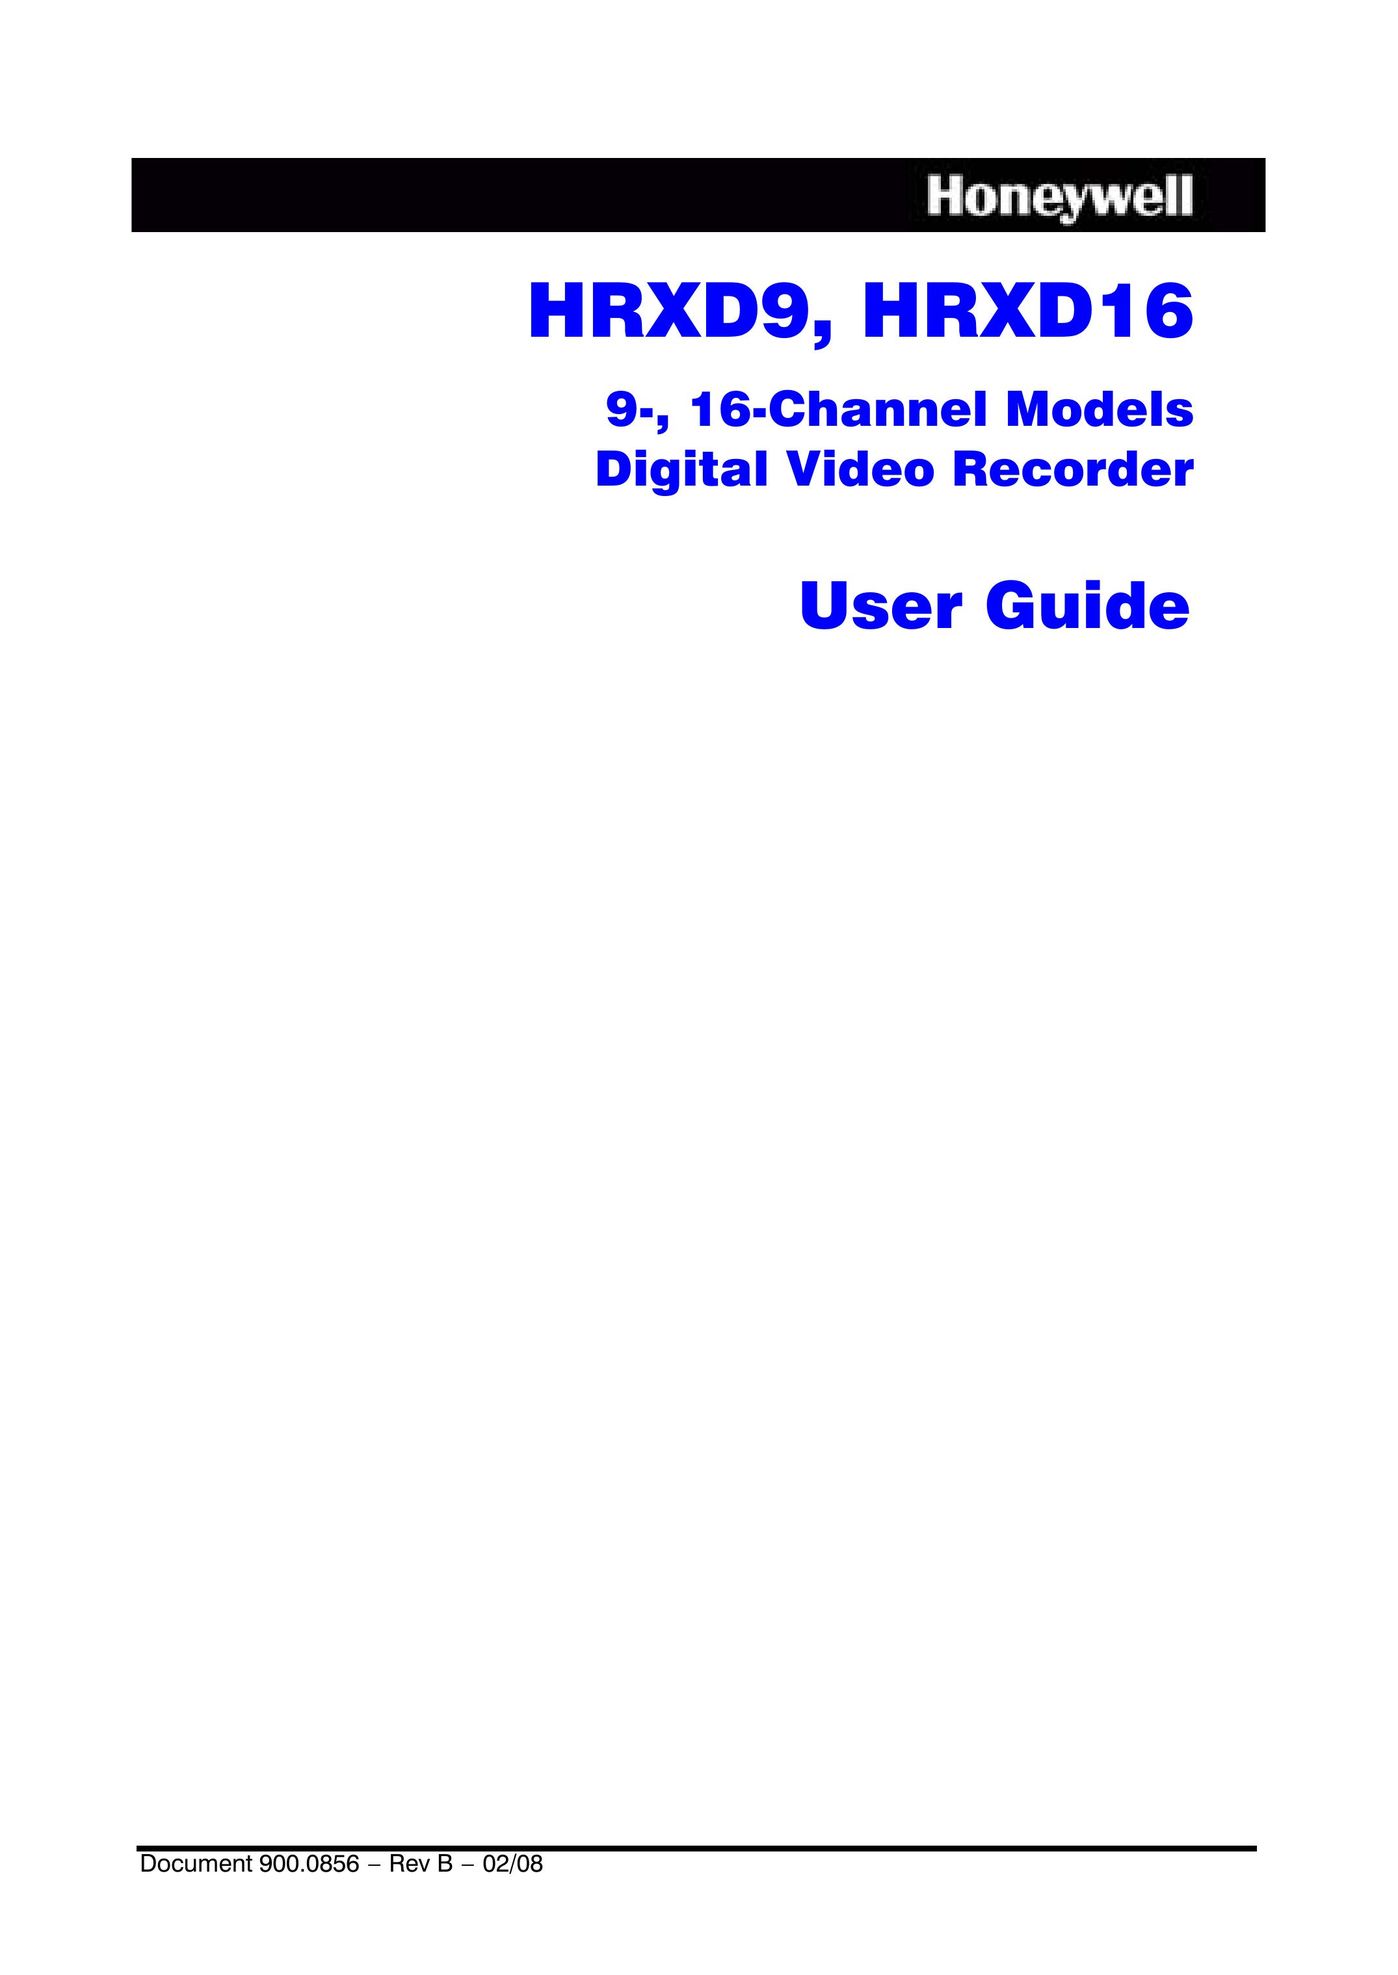 Honeywell HRXD16 DVR User Manual